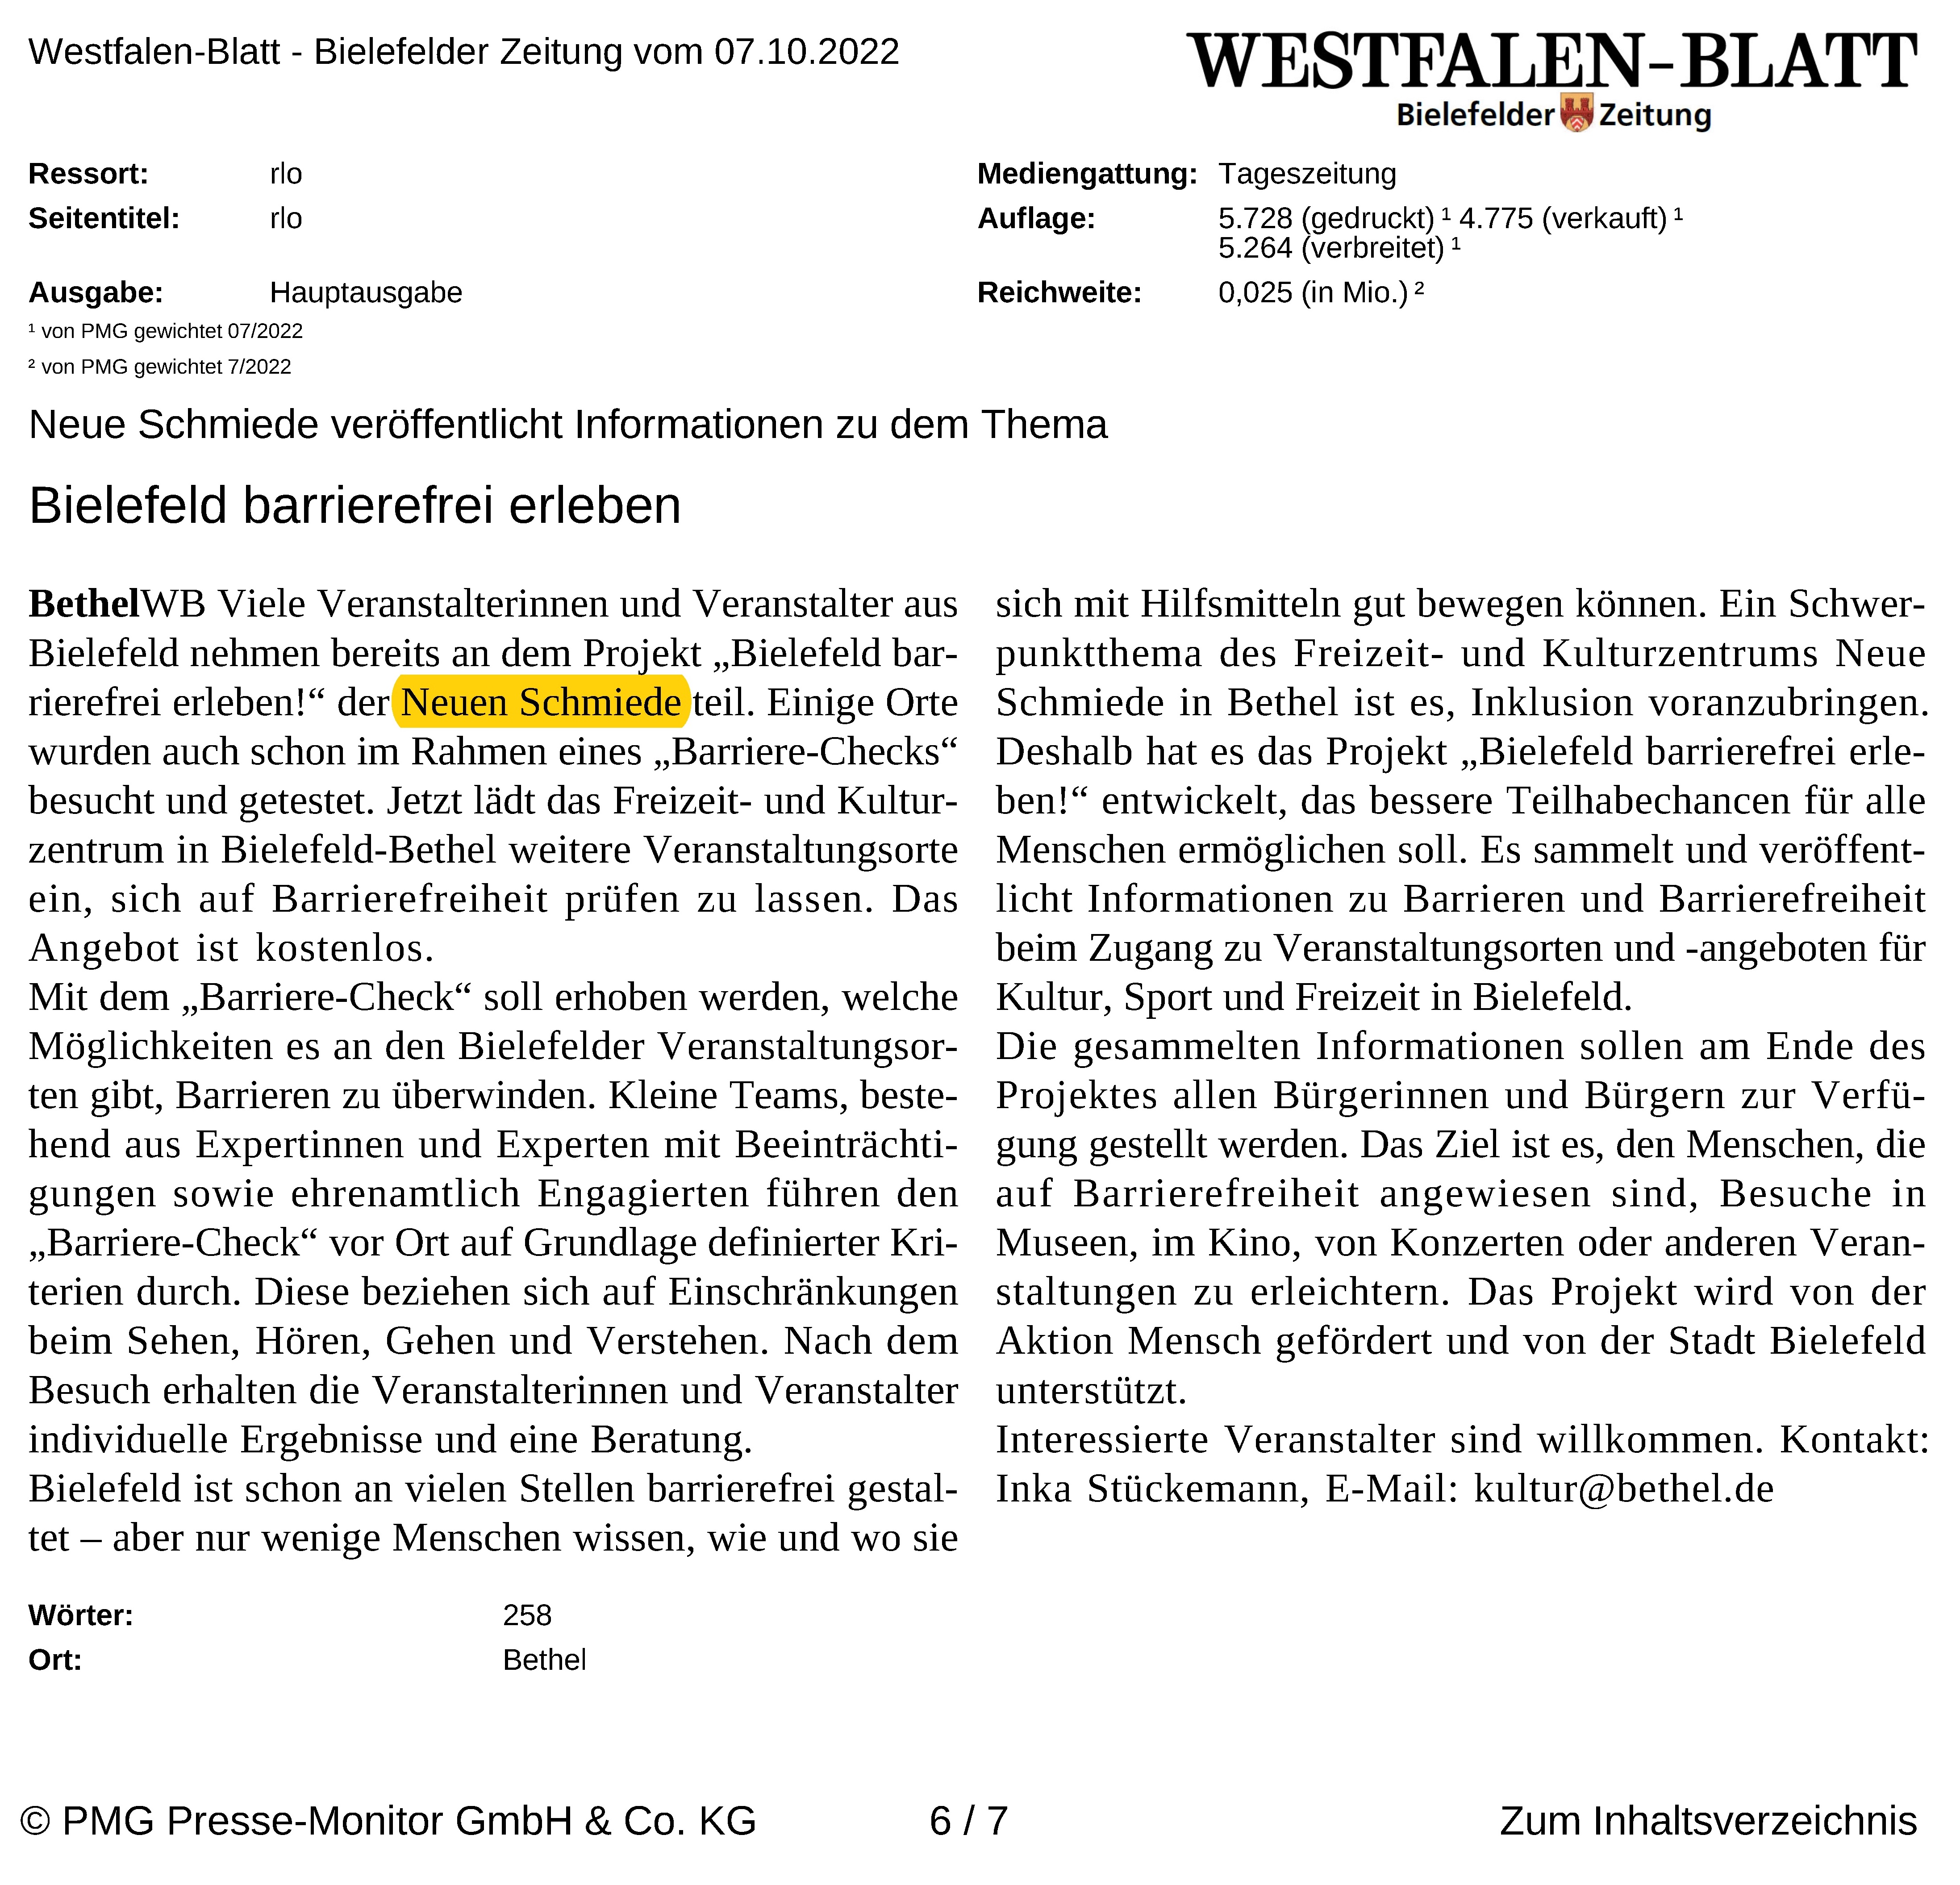 Pressebericht im Westfalen-Blatt